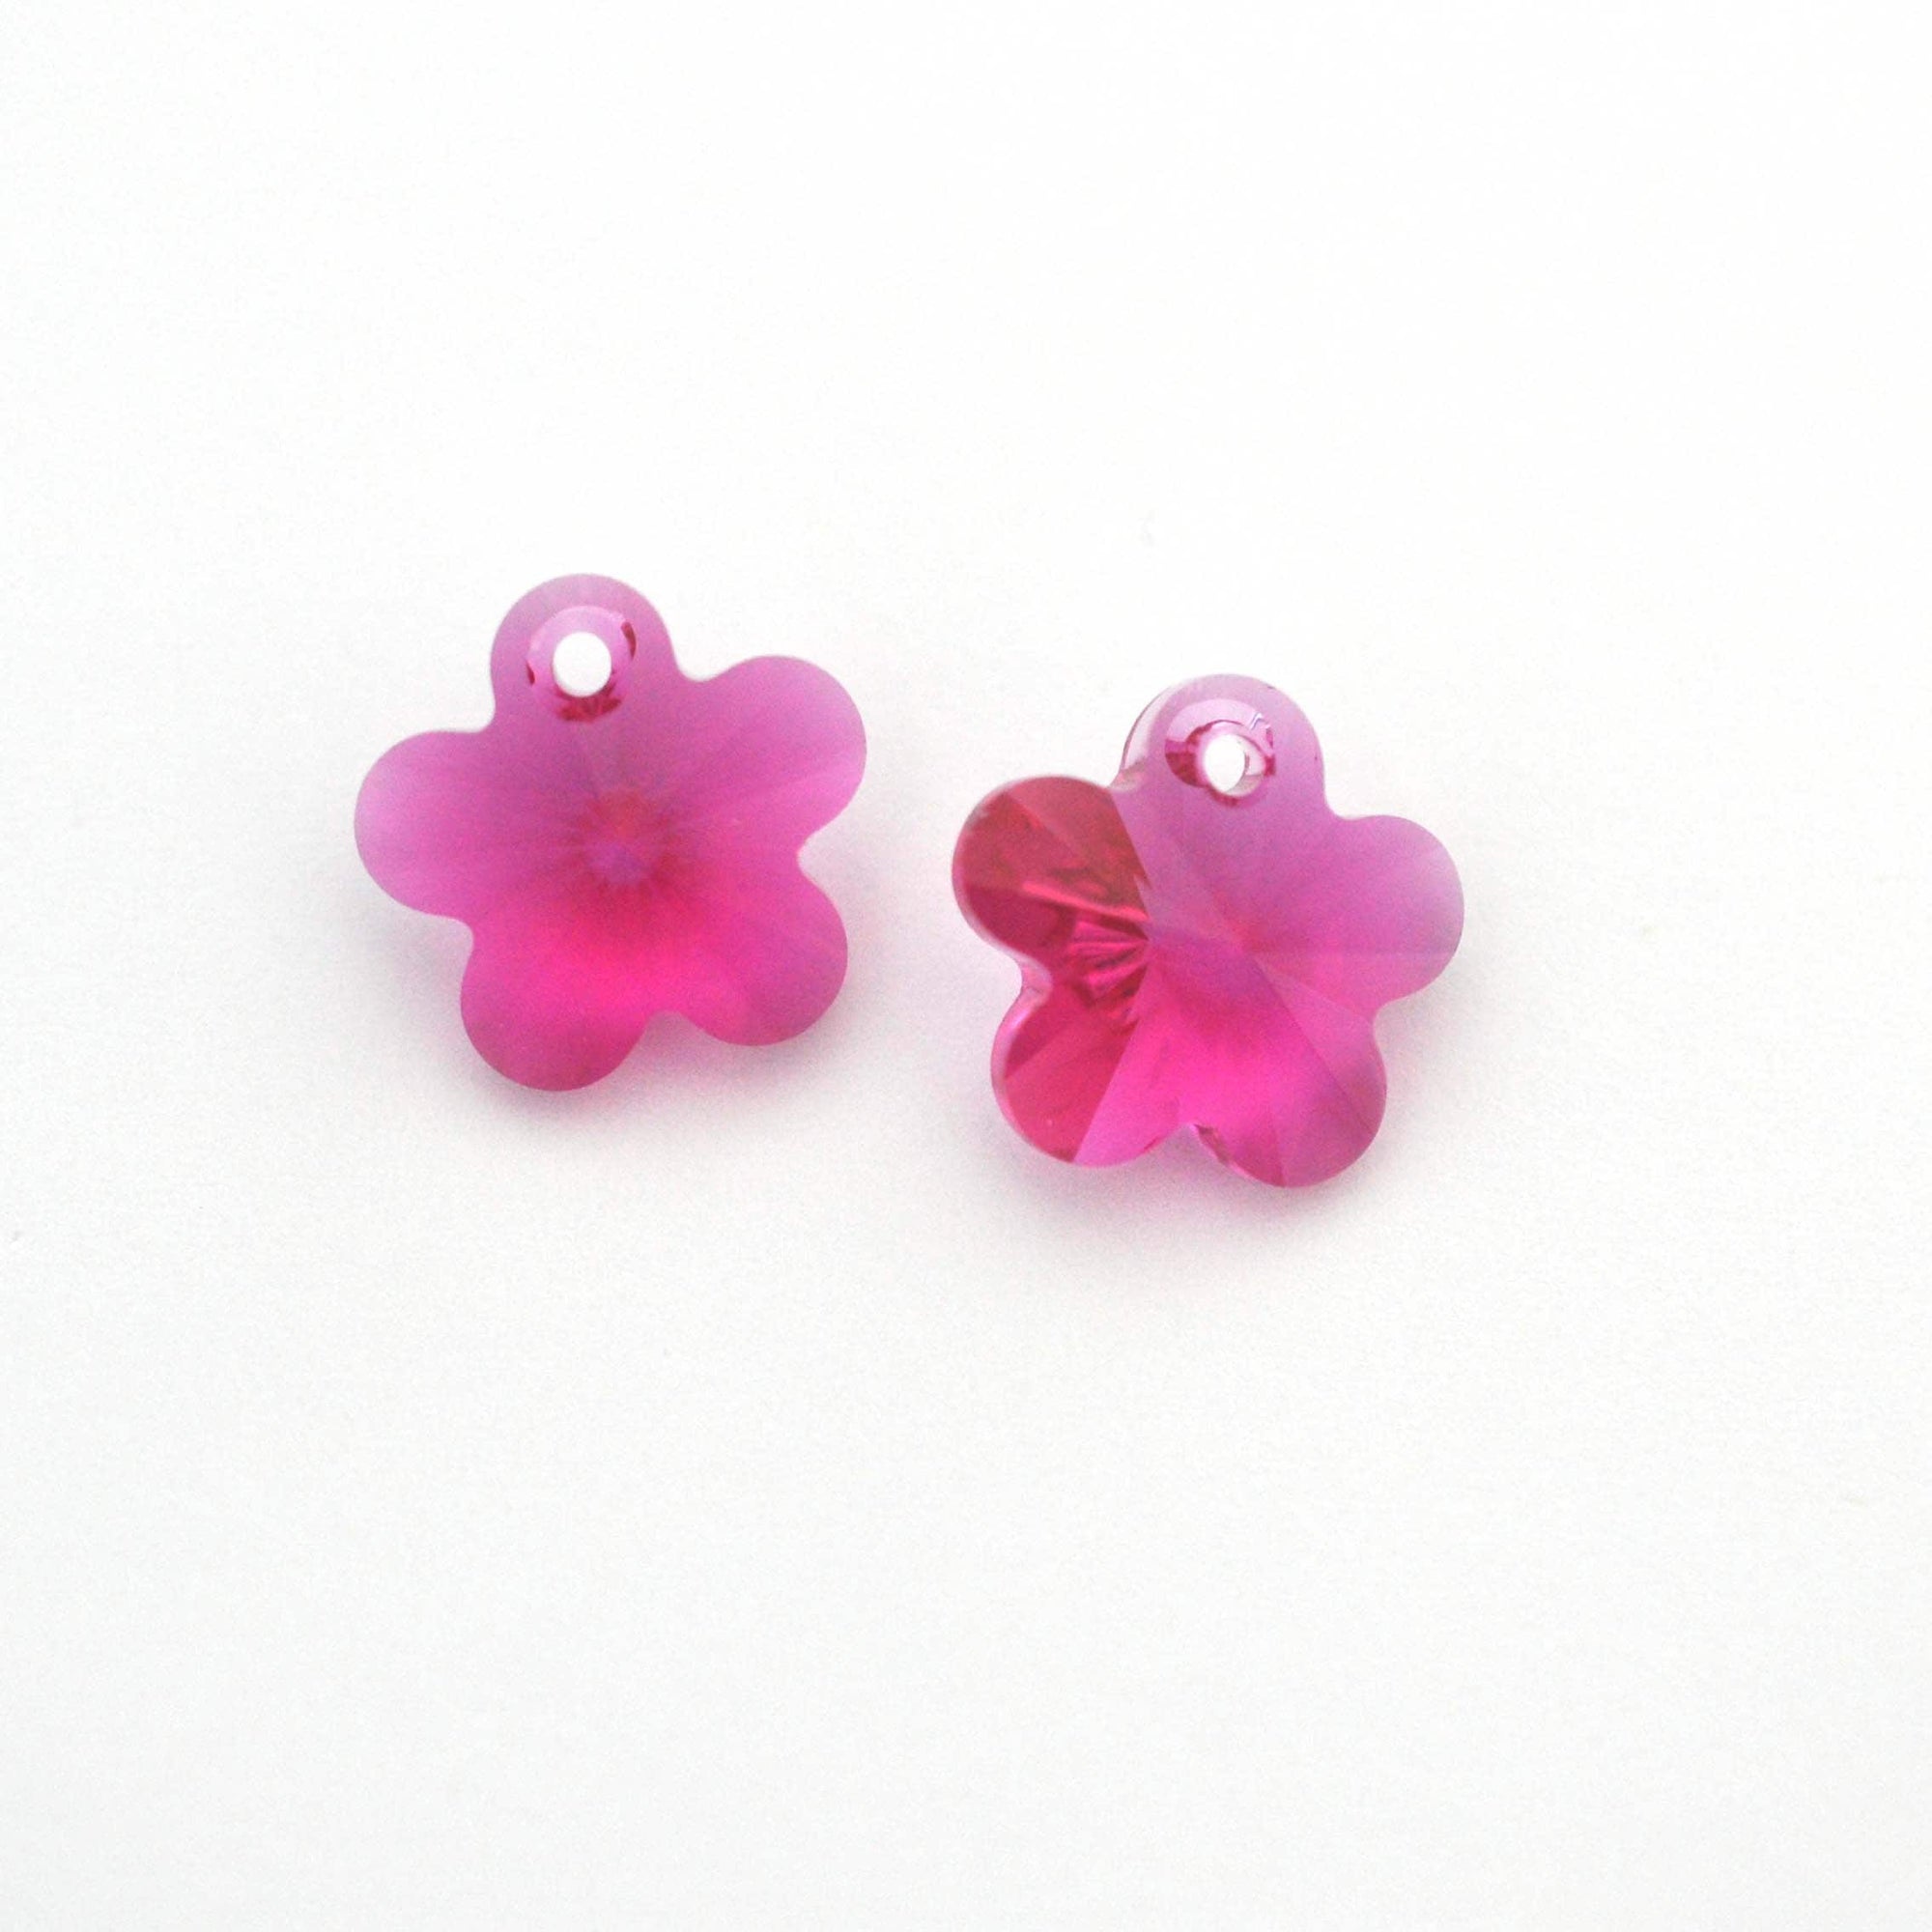 Fuchsia Pink Flower Pendant 6744 Barton Crystal 14mm - 1 Pair (2 Pieces)